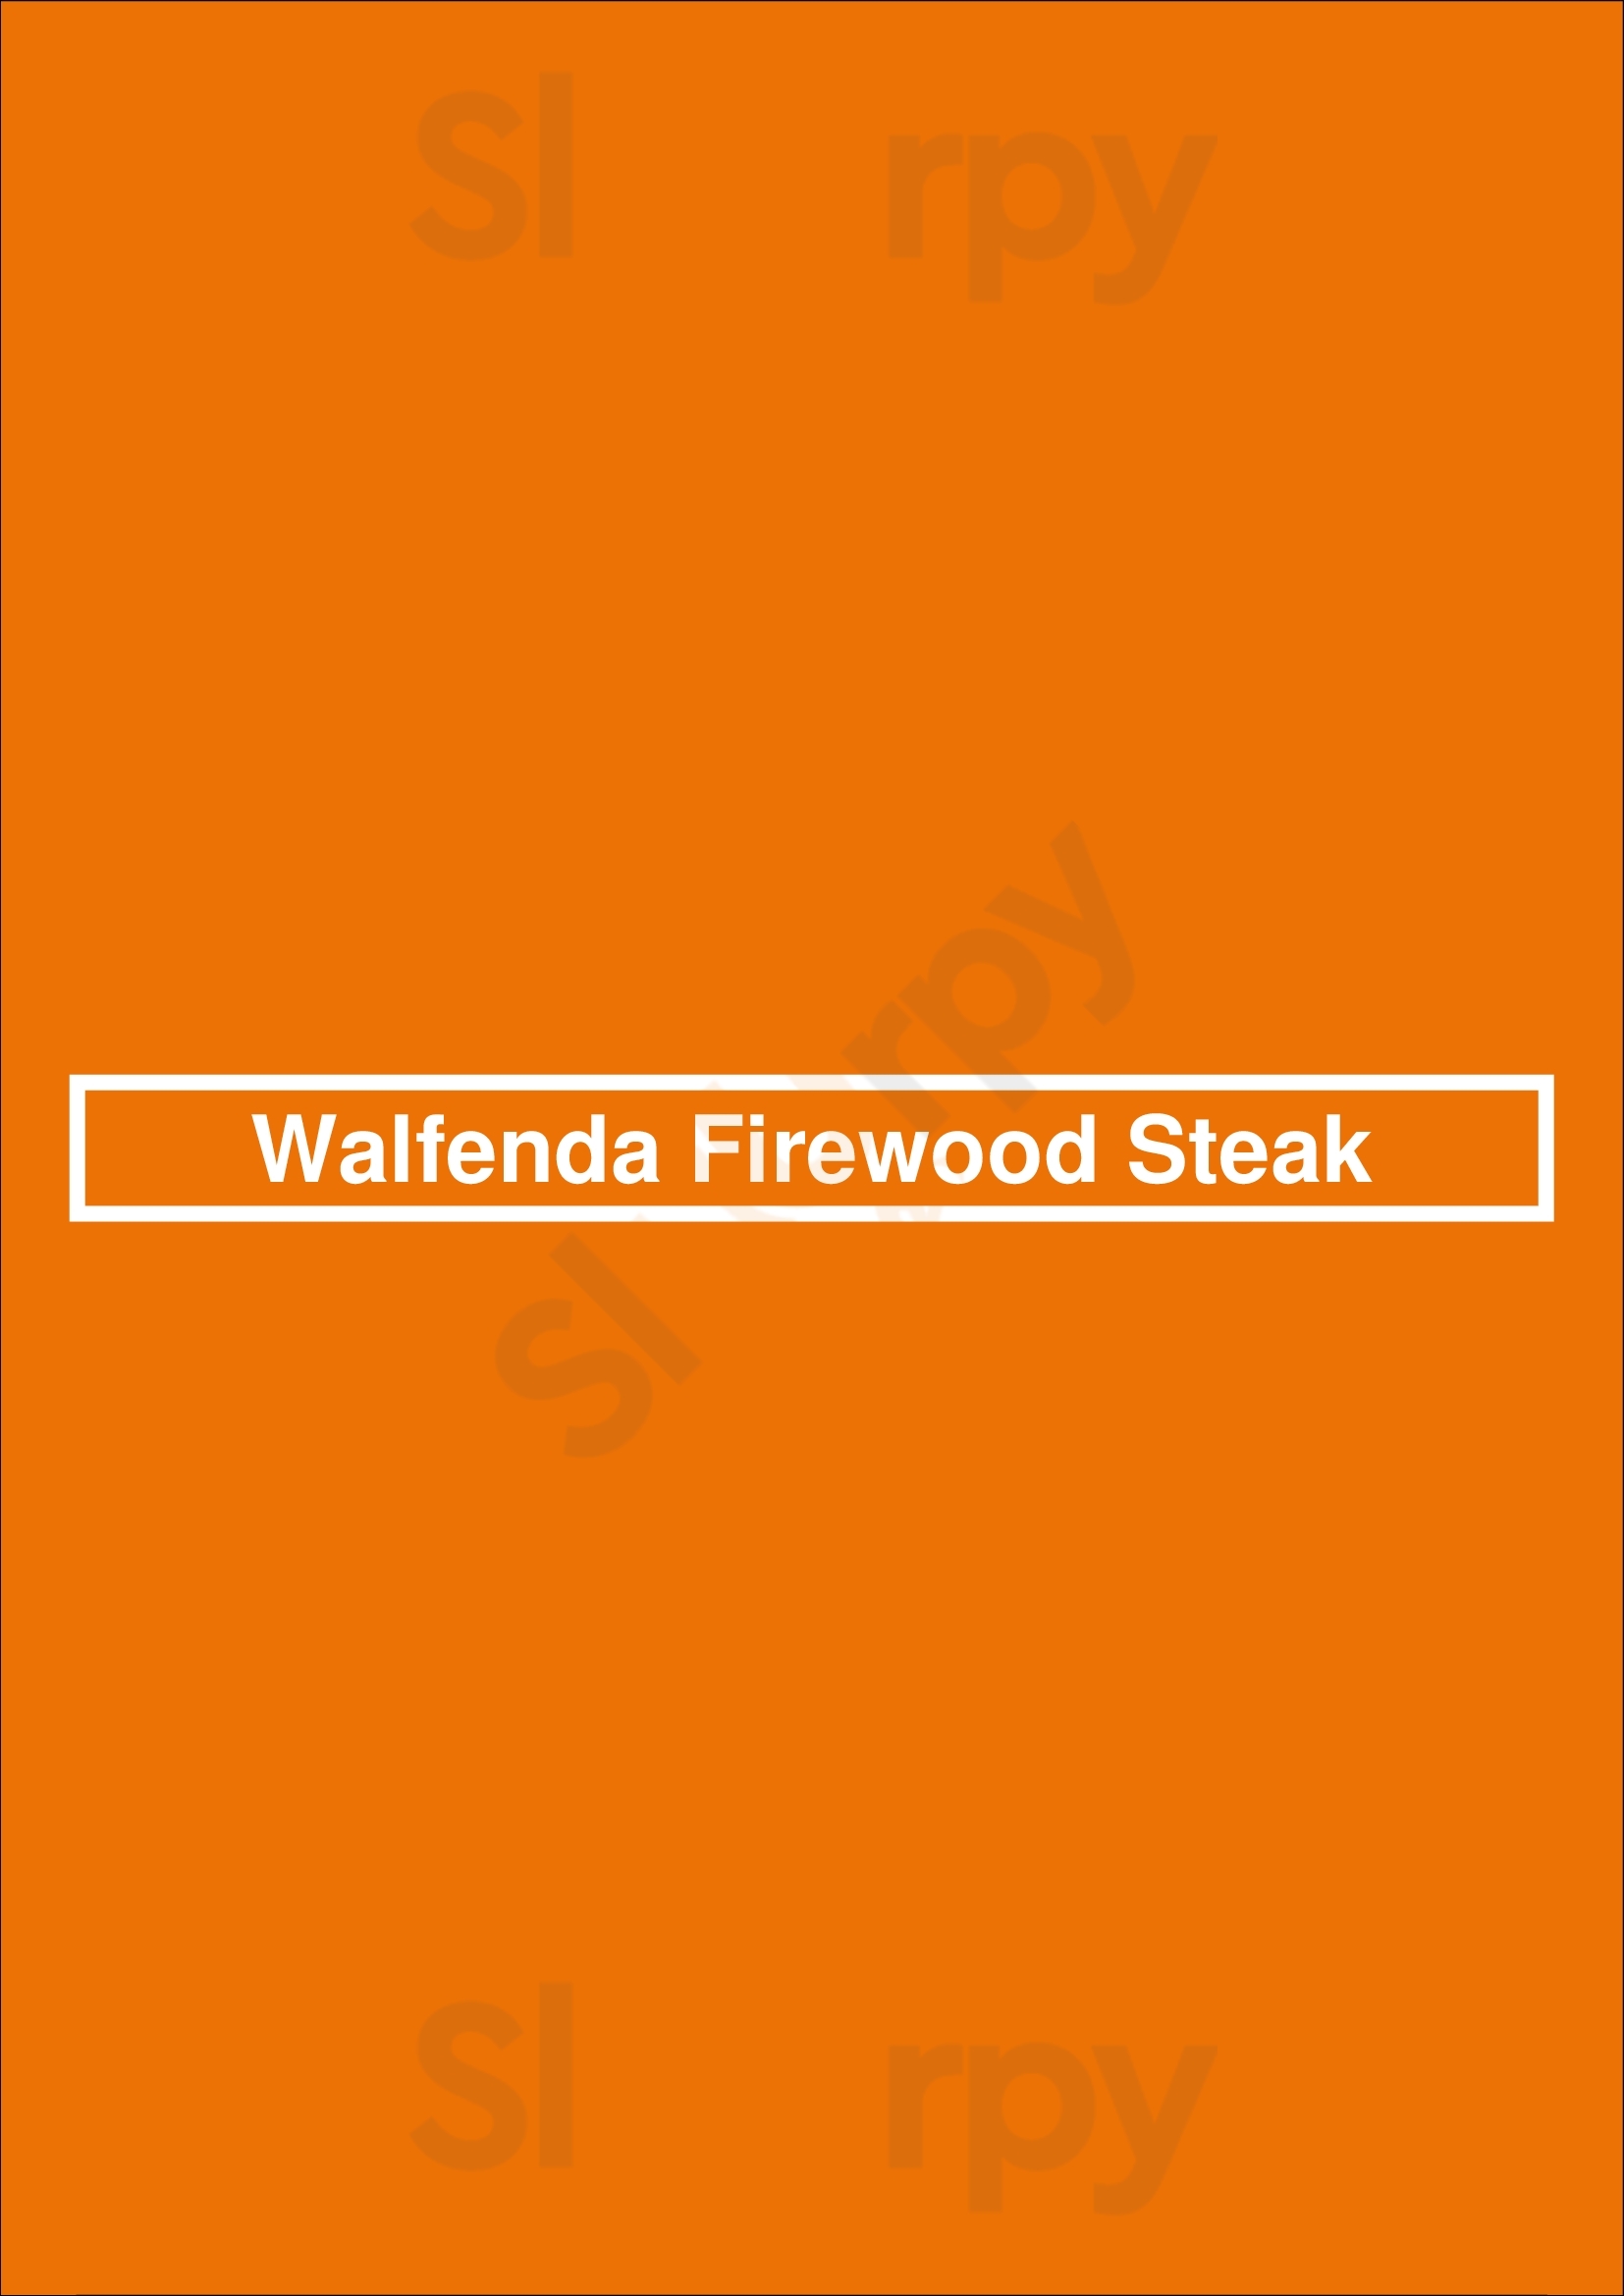 Walfenda Firewood Steak São Paulo Menu - 1